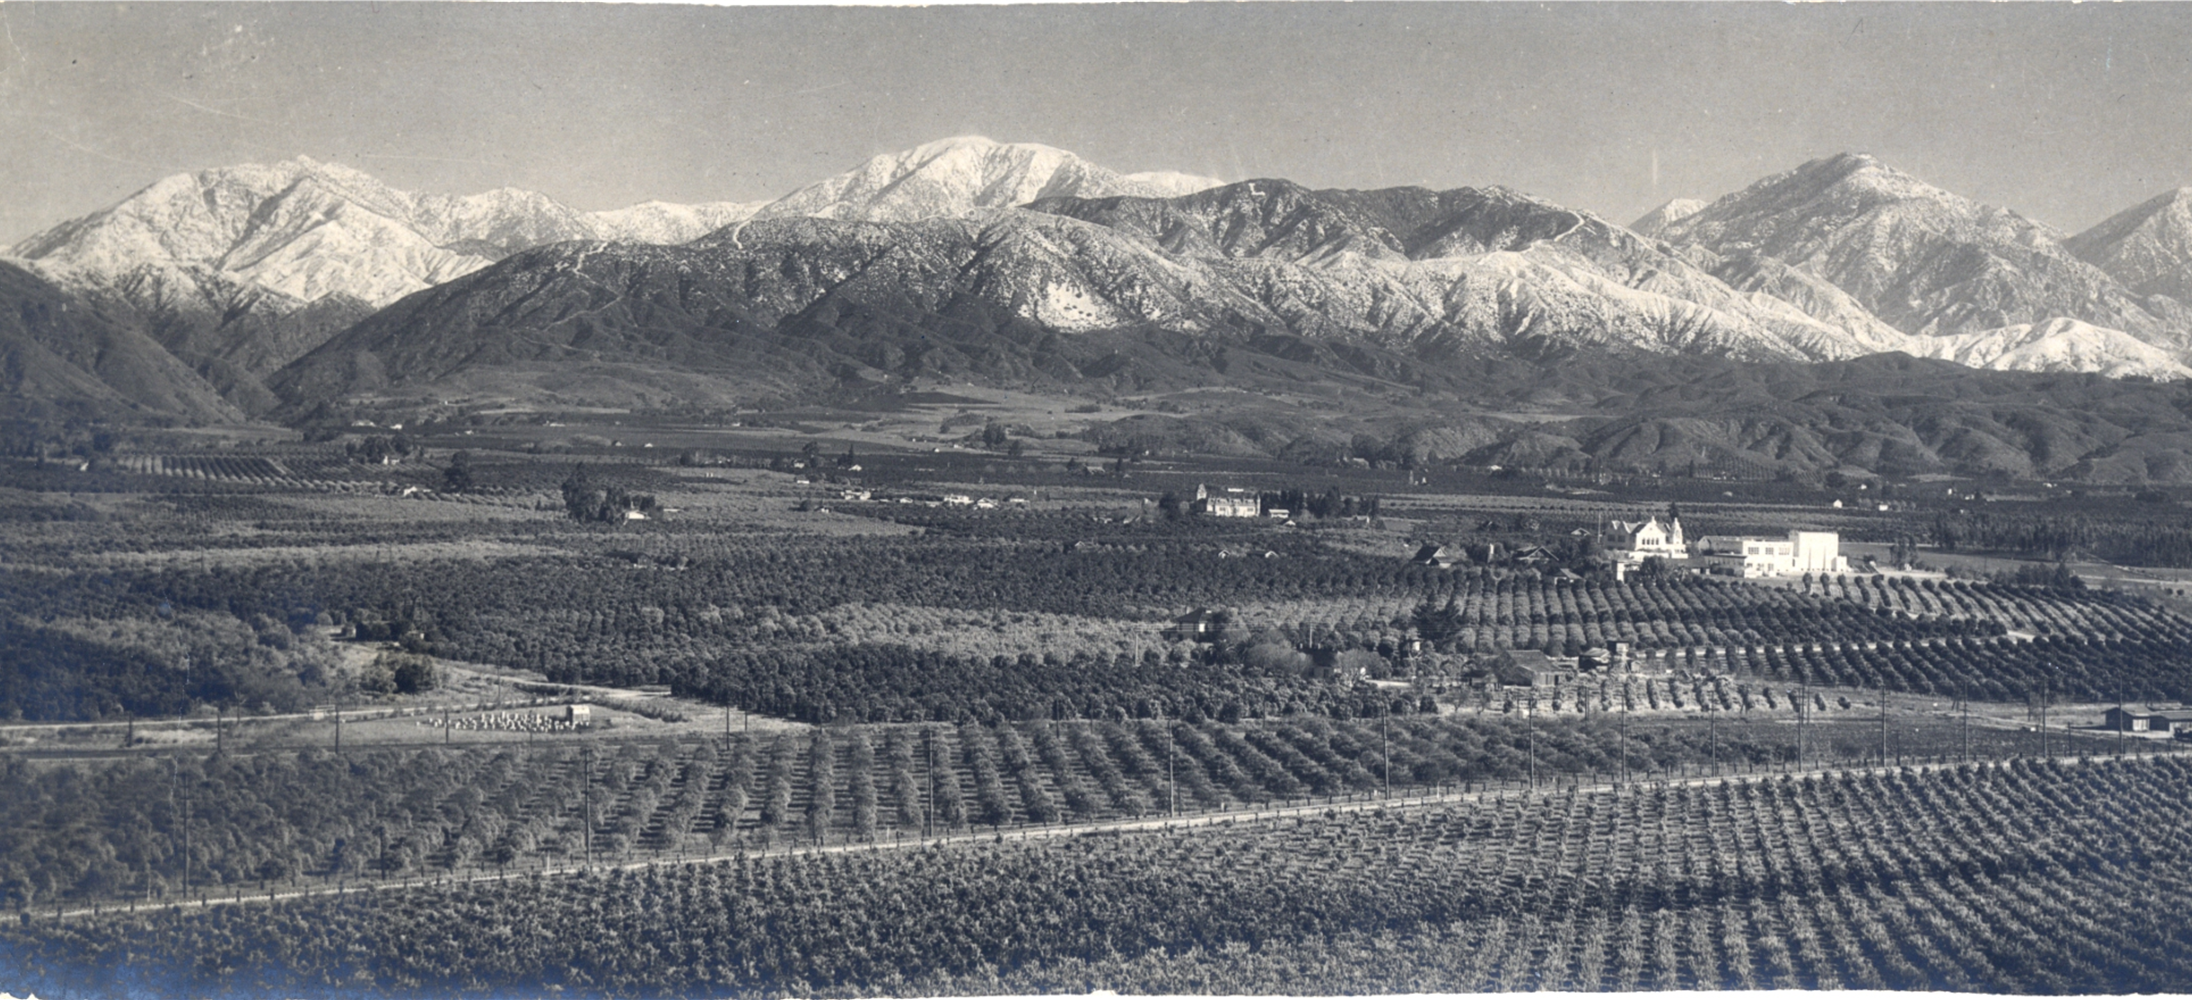 San Gabriel Valley circa 1920